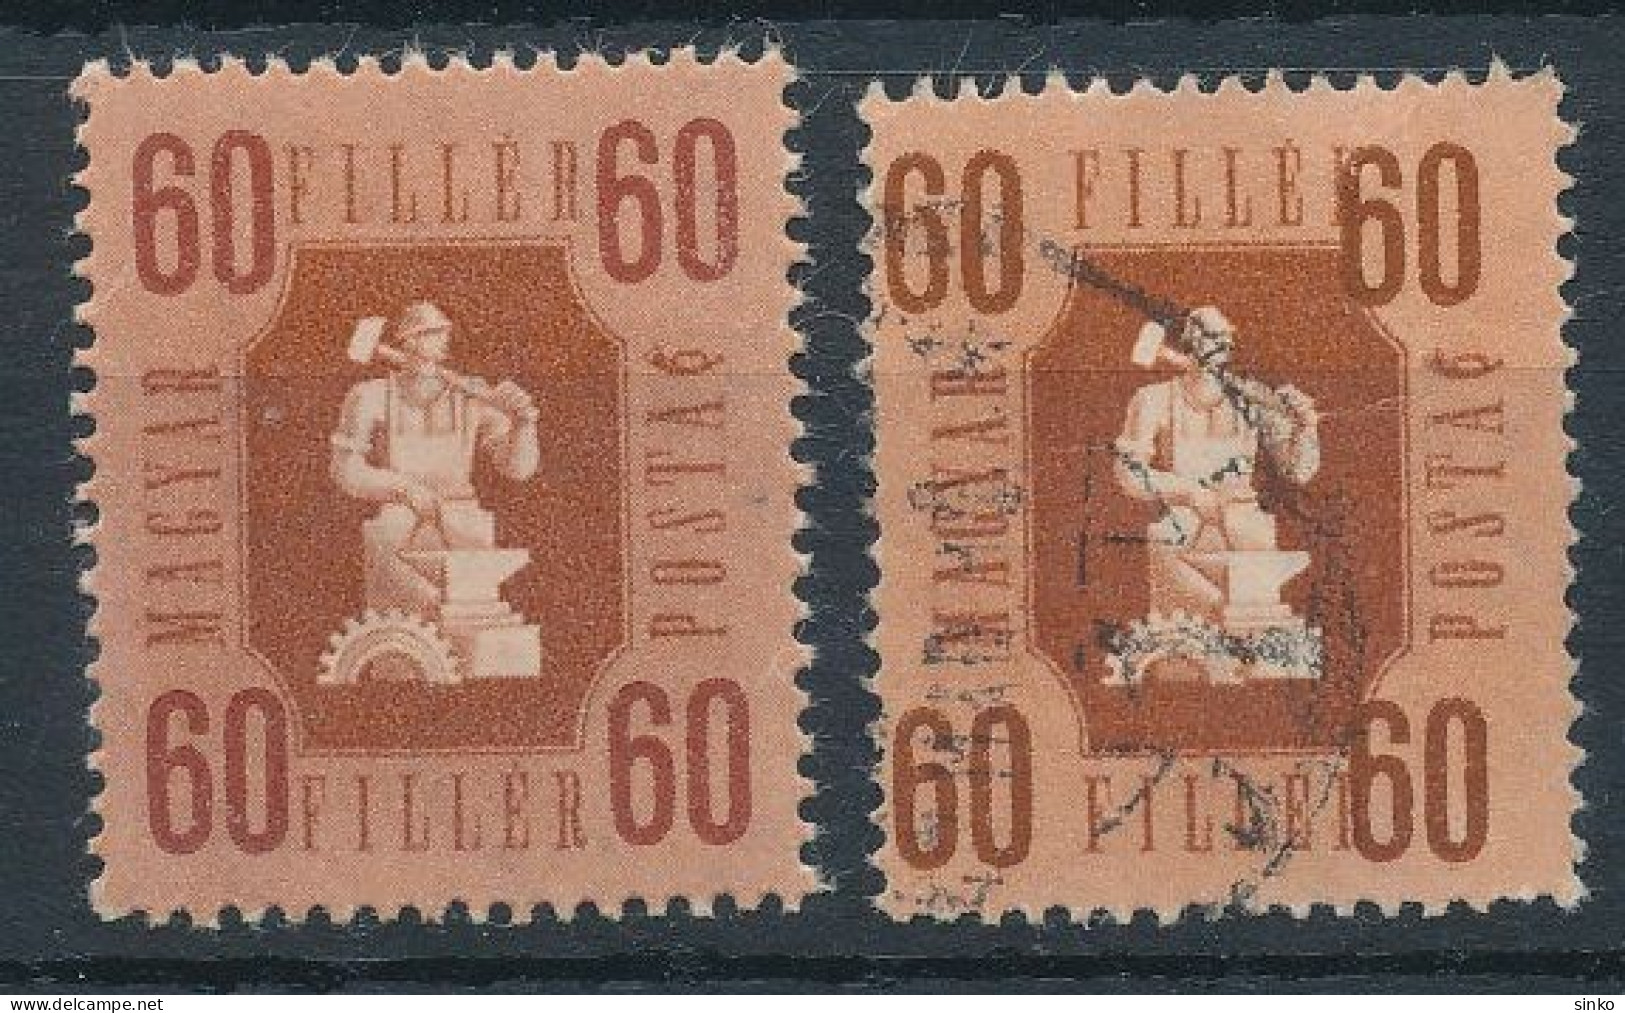 1946. Forint-Filler - Misprint - Errors, Freaks & Oddities (EFO)